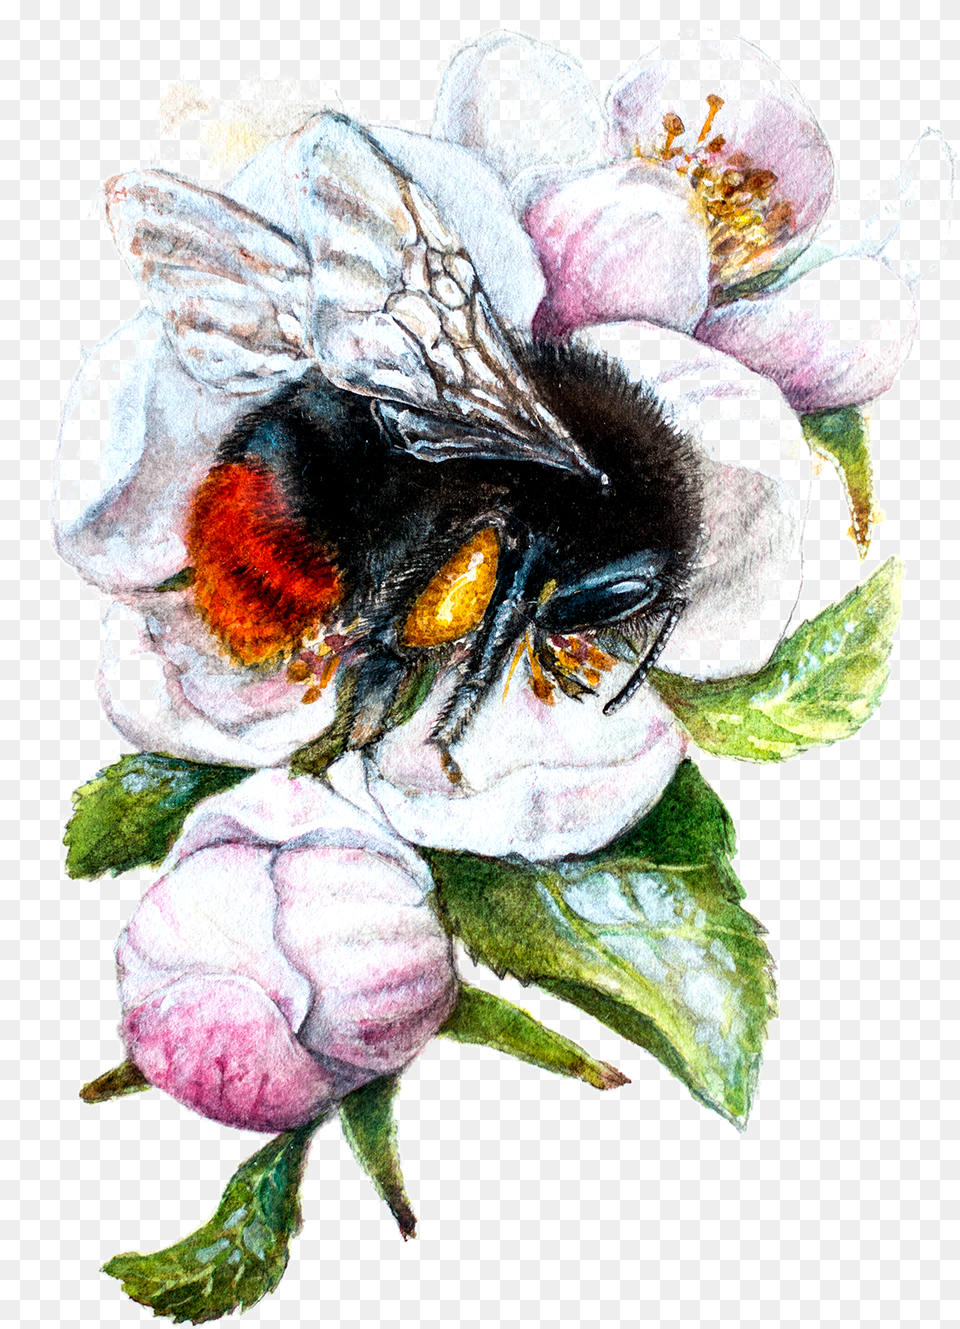 Bee, Animal, Apidae, Bumblebee, Insect Png